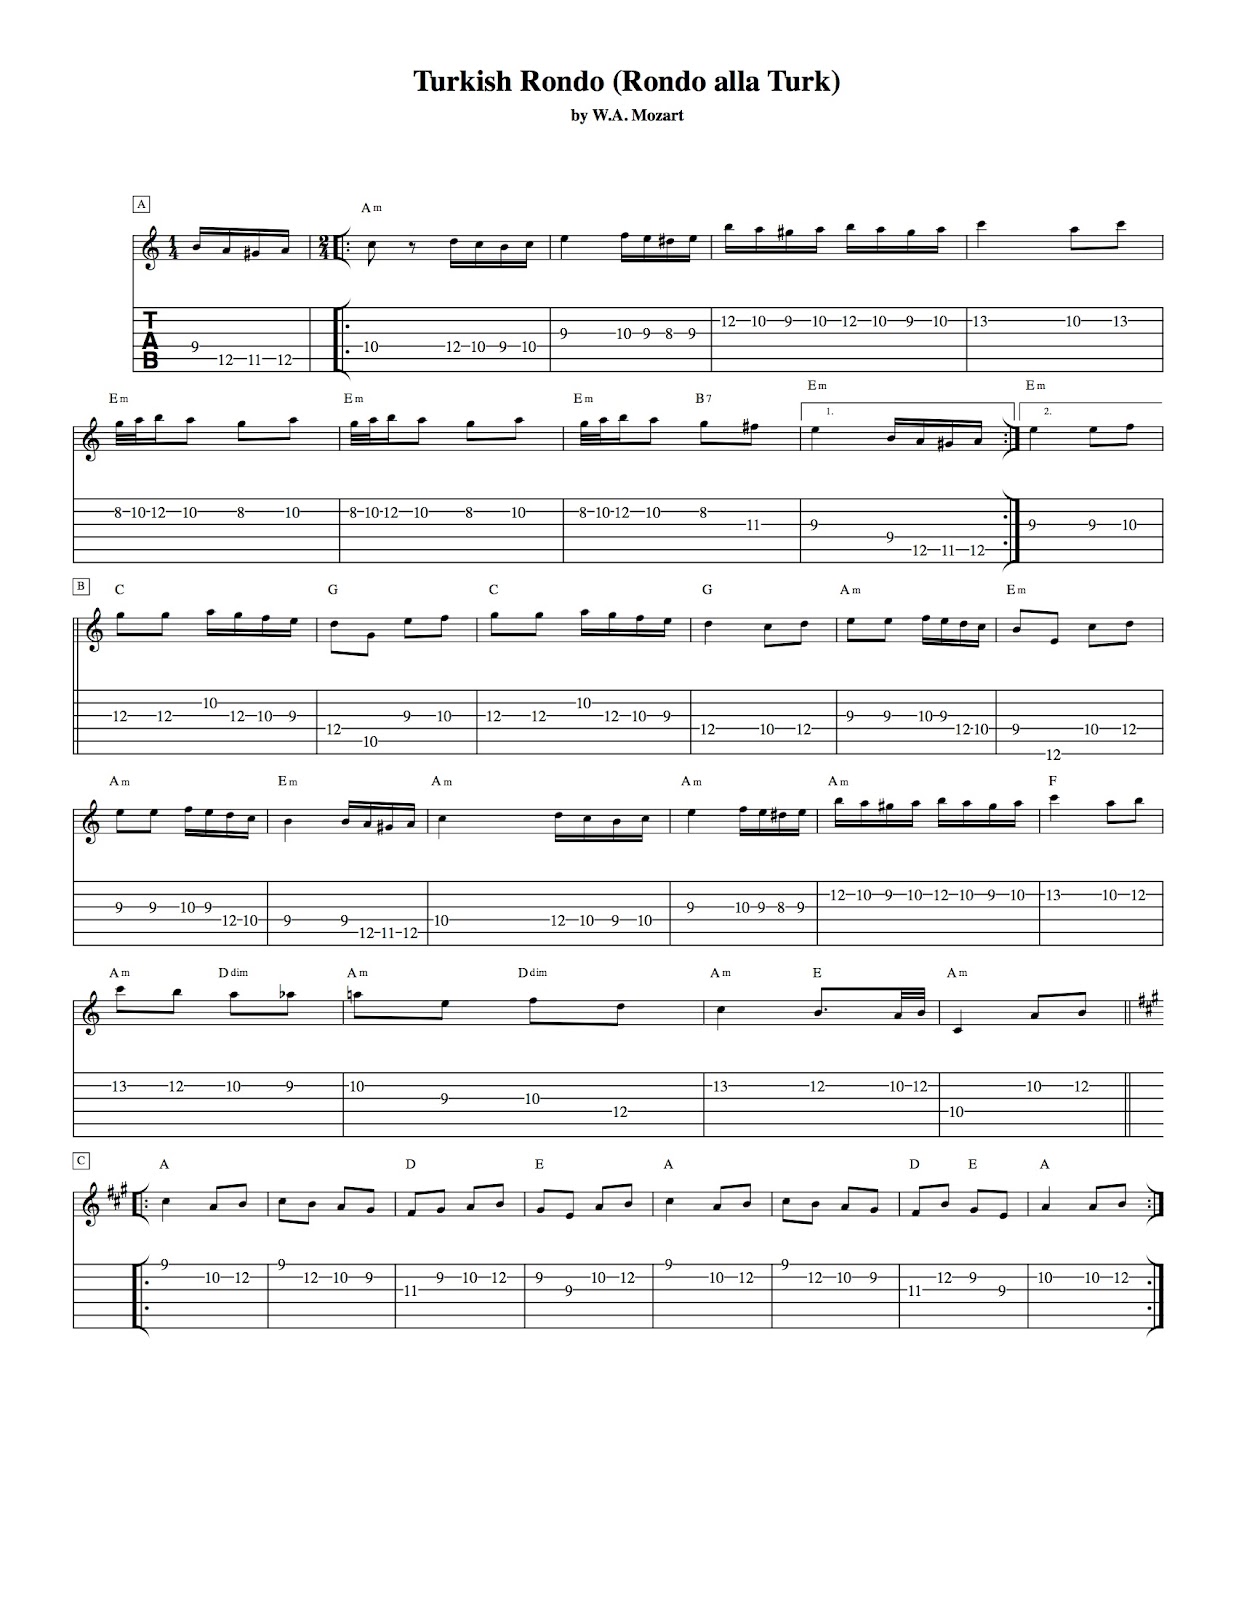 rondo alla turca guitar tab pdf free